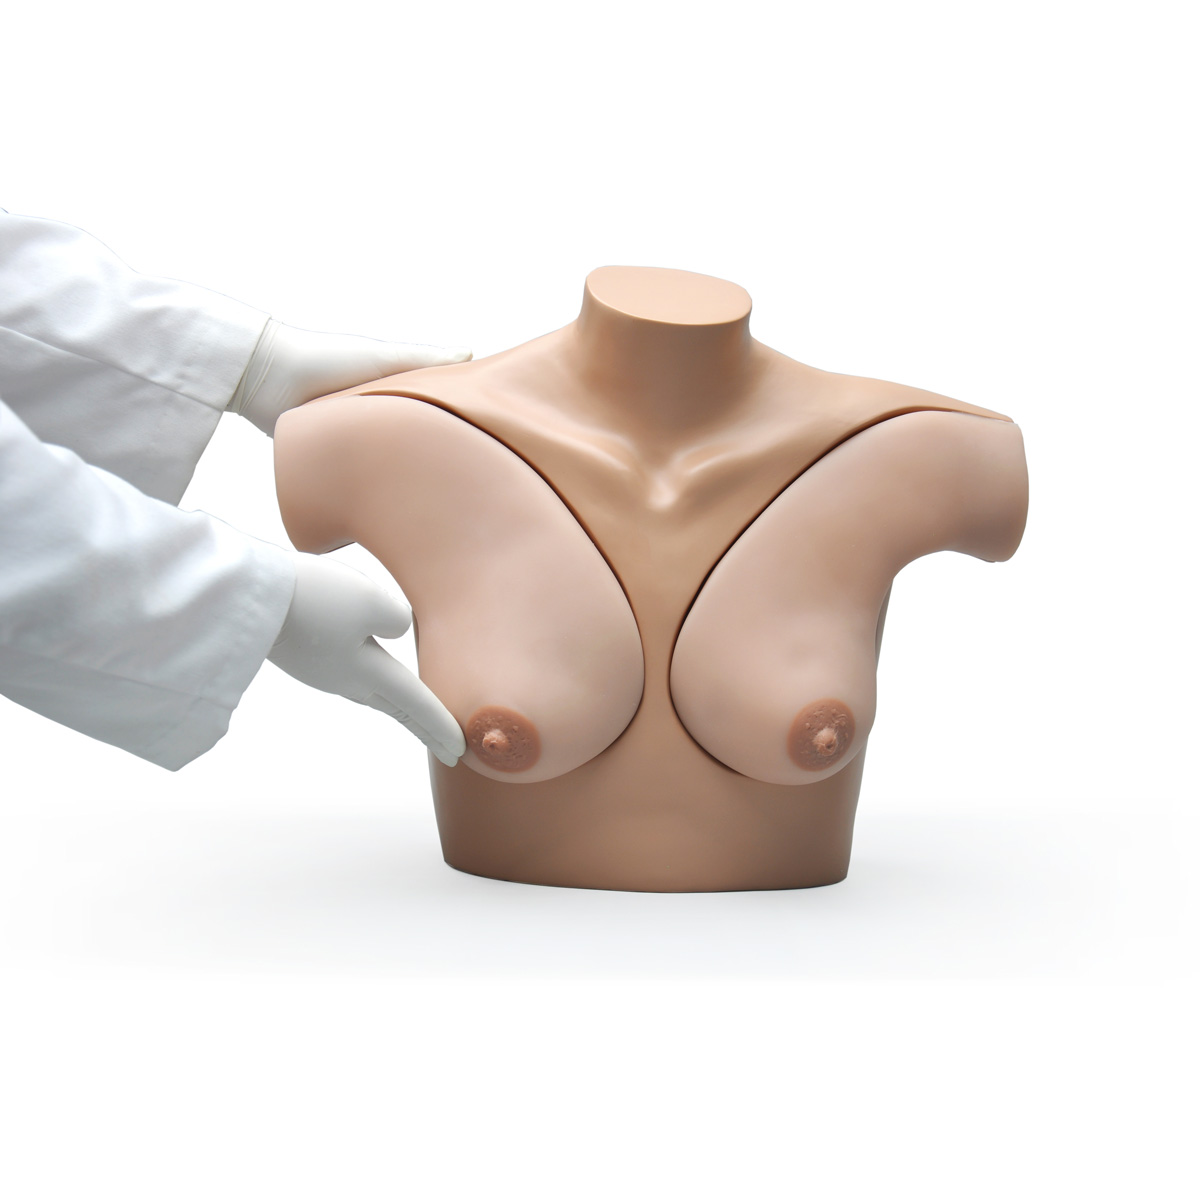 Breast model - L51D - 3B Scientific - breast examination / female